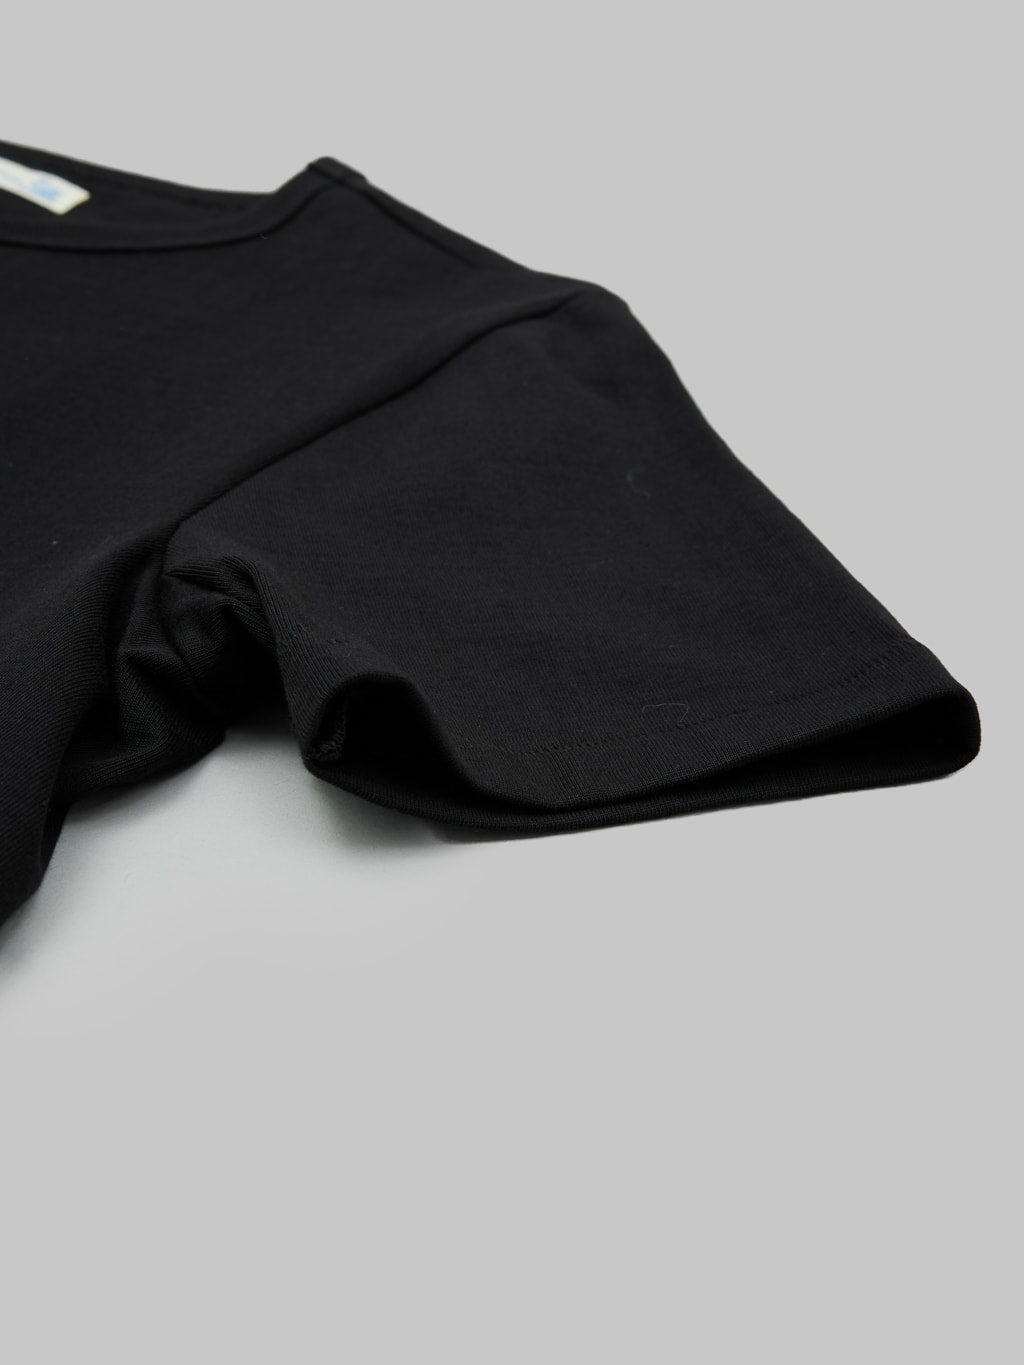 merz b schwanen good originals loopwheeled Tshirt classic fit black sleeve closeup